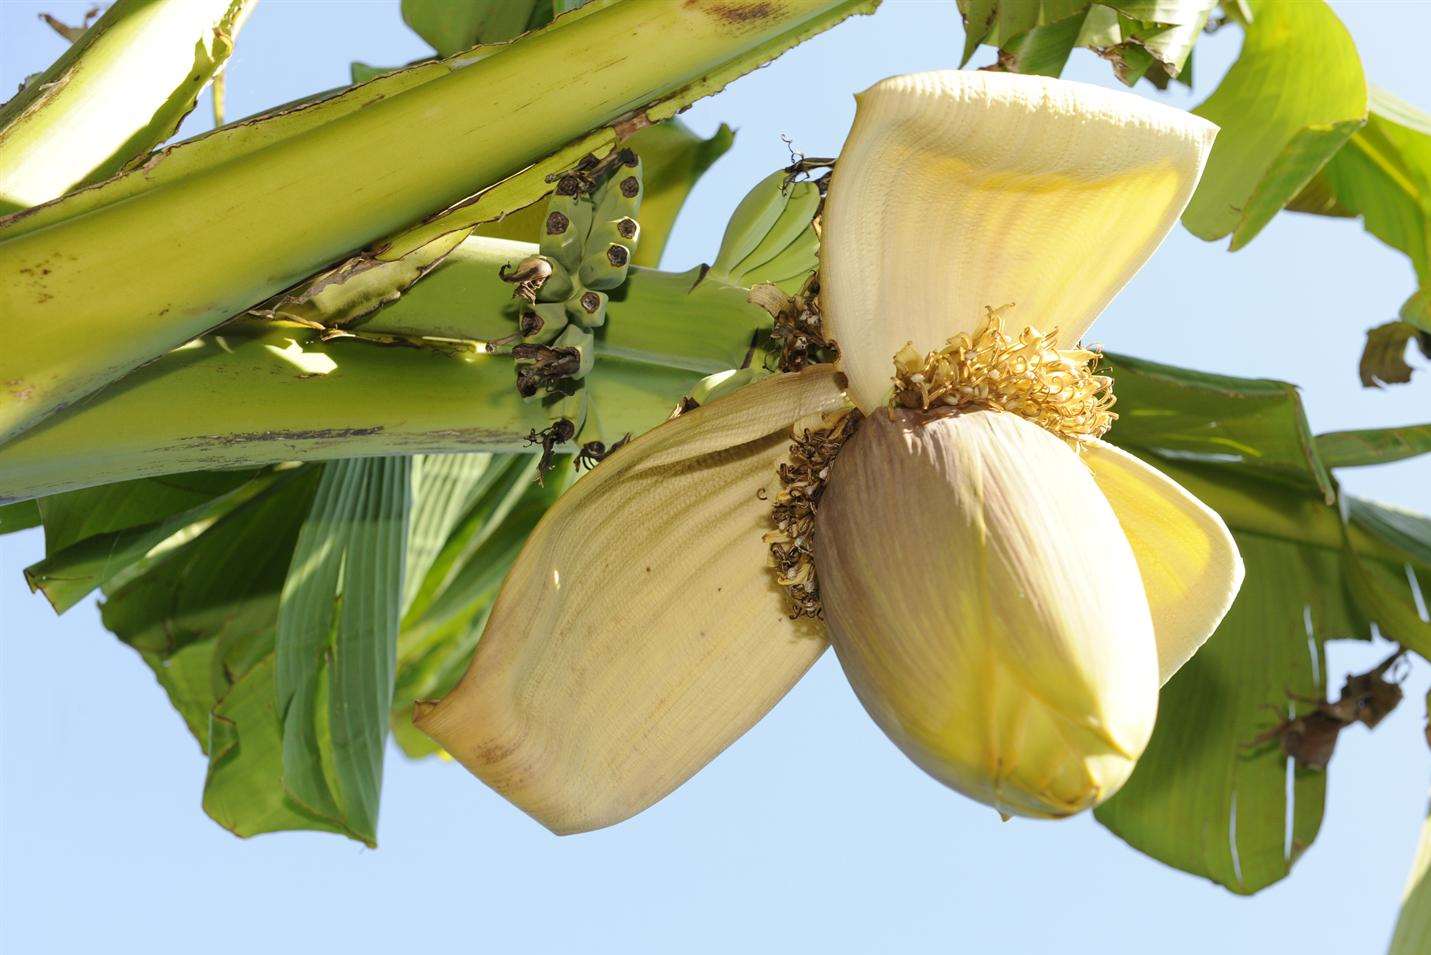 A close-up of the bananas ripening